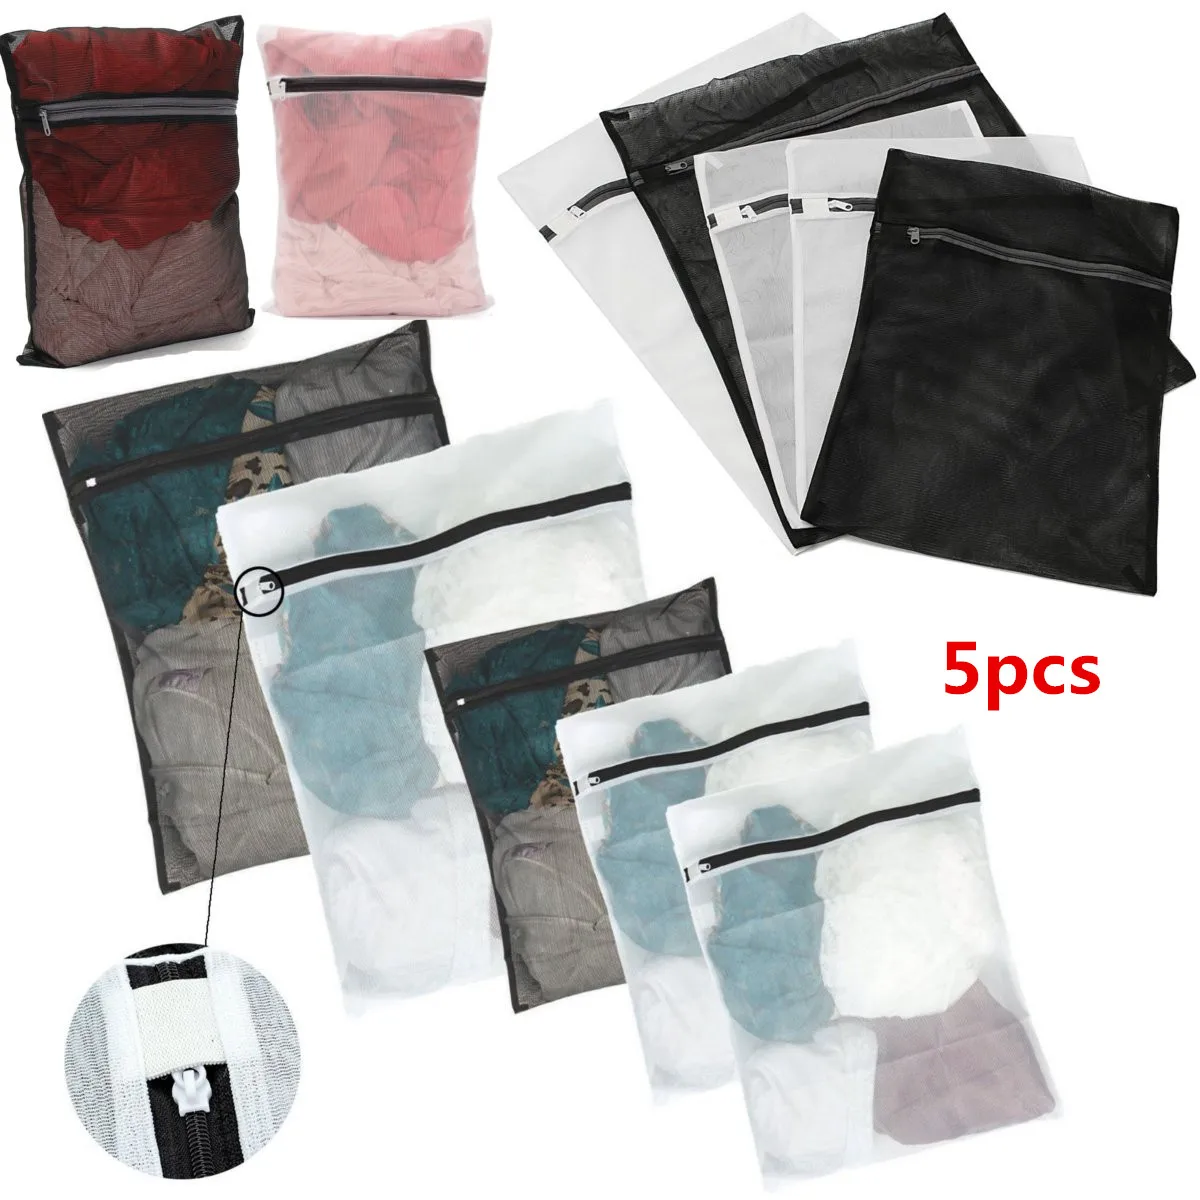 Laundry Mesh Net Washing Bag Lingerie Underwear Bra Clothes Socks Travel 5Pcs